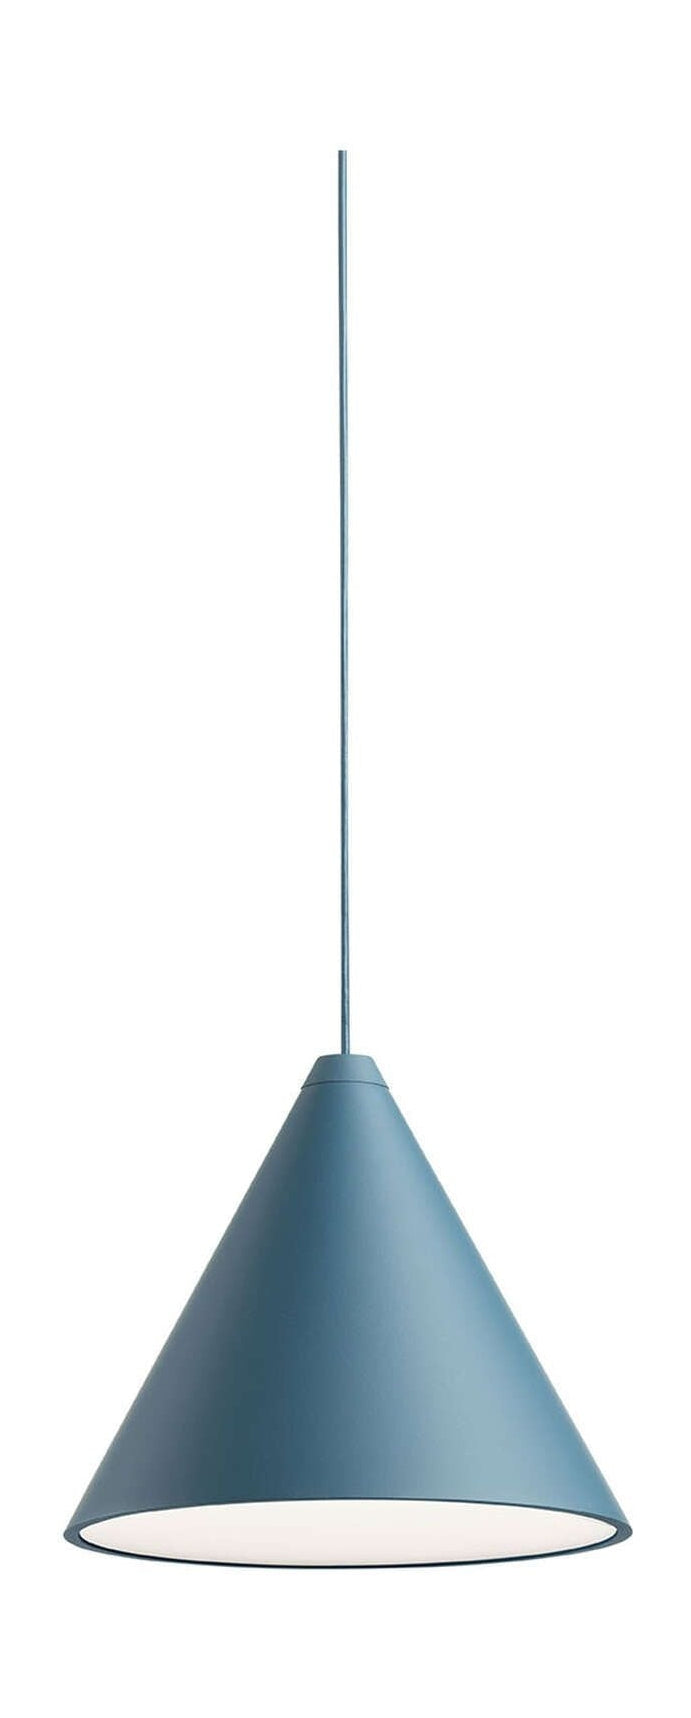 Flos STRING LICHT KEAD HOOFDE HANDER LAMP 12 M, blauw